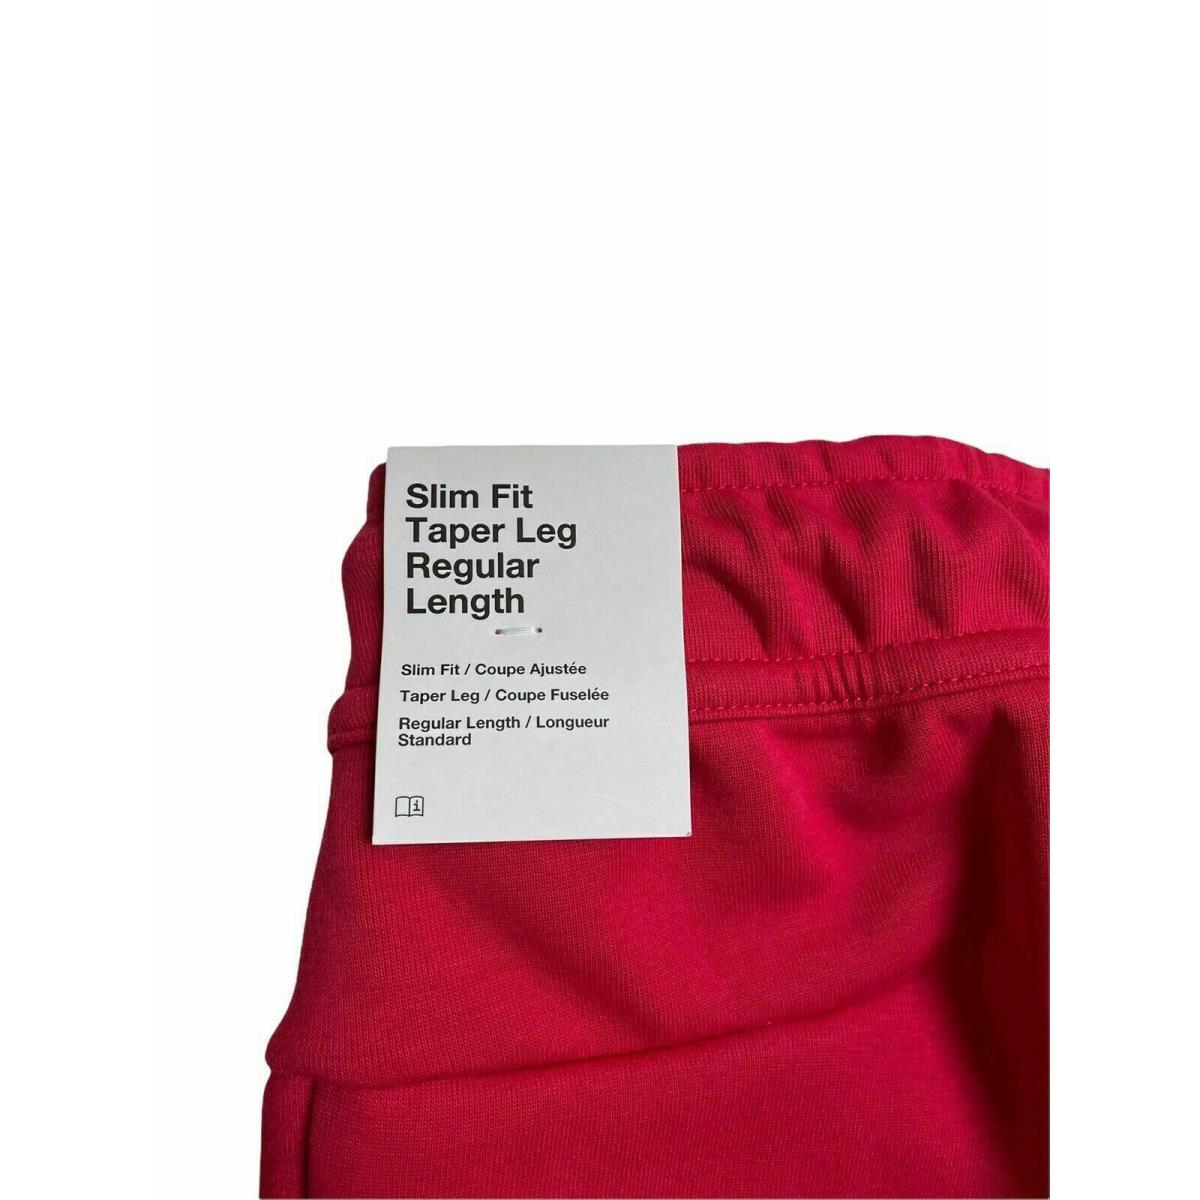 Nike clothing Sportswear Tech - Very Berry, Pomegranate, Black 1